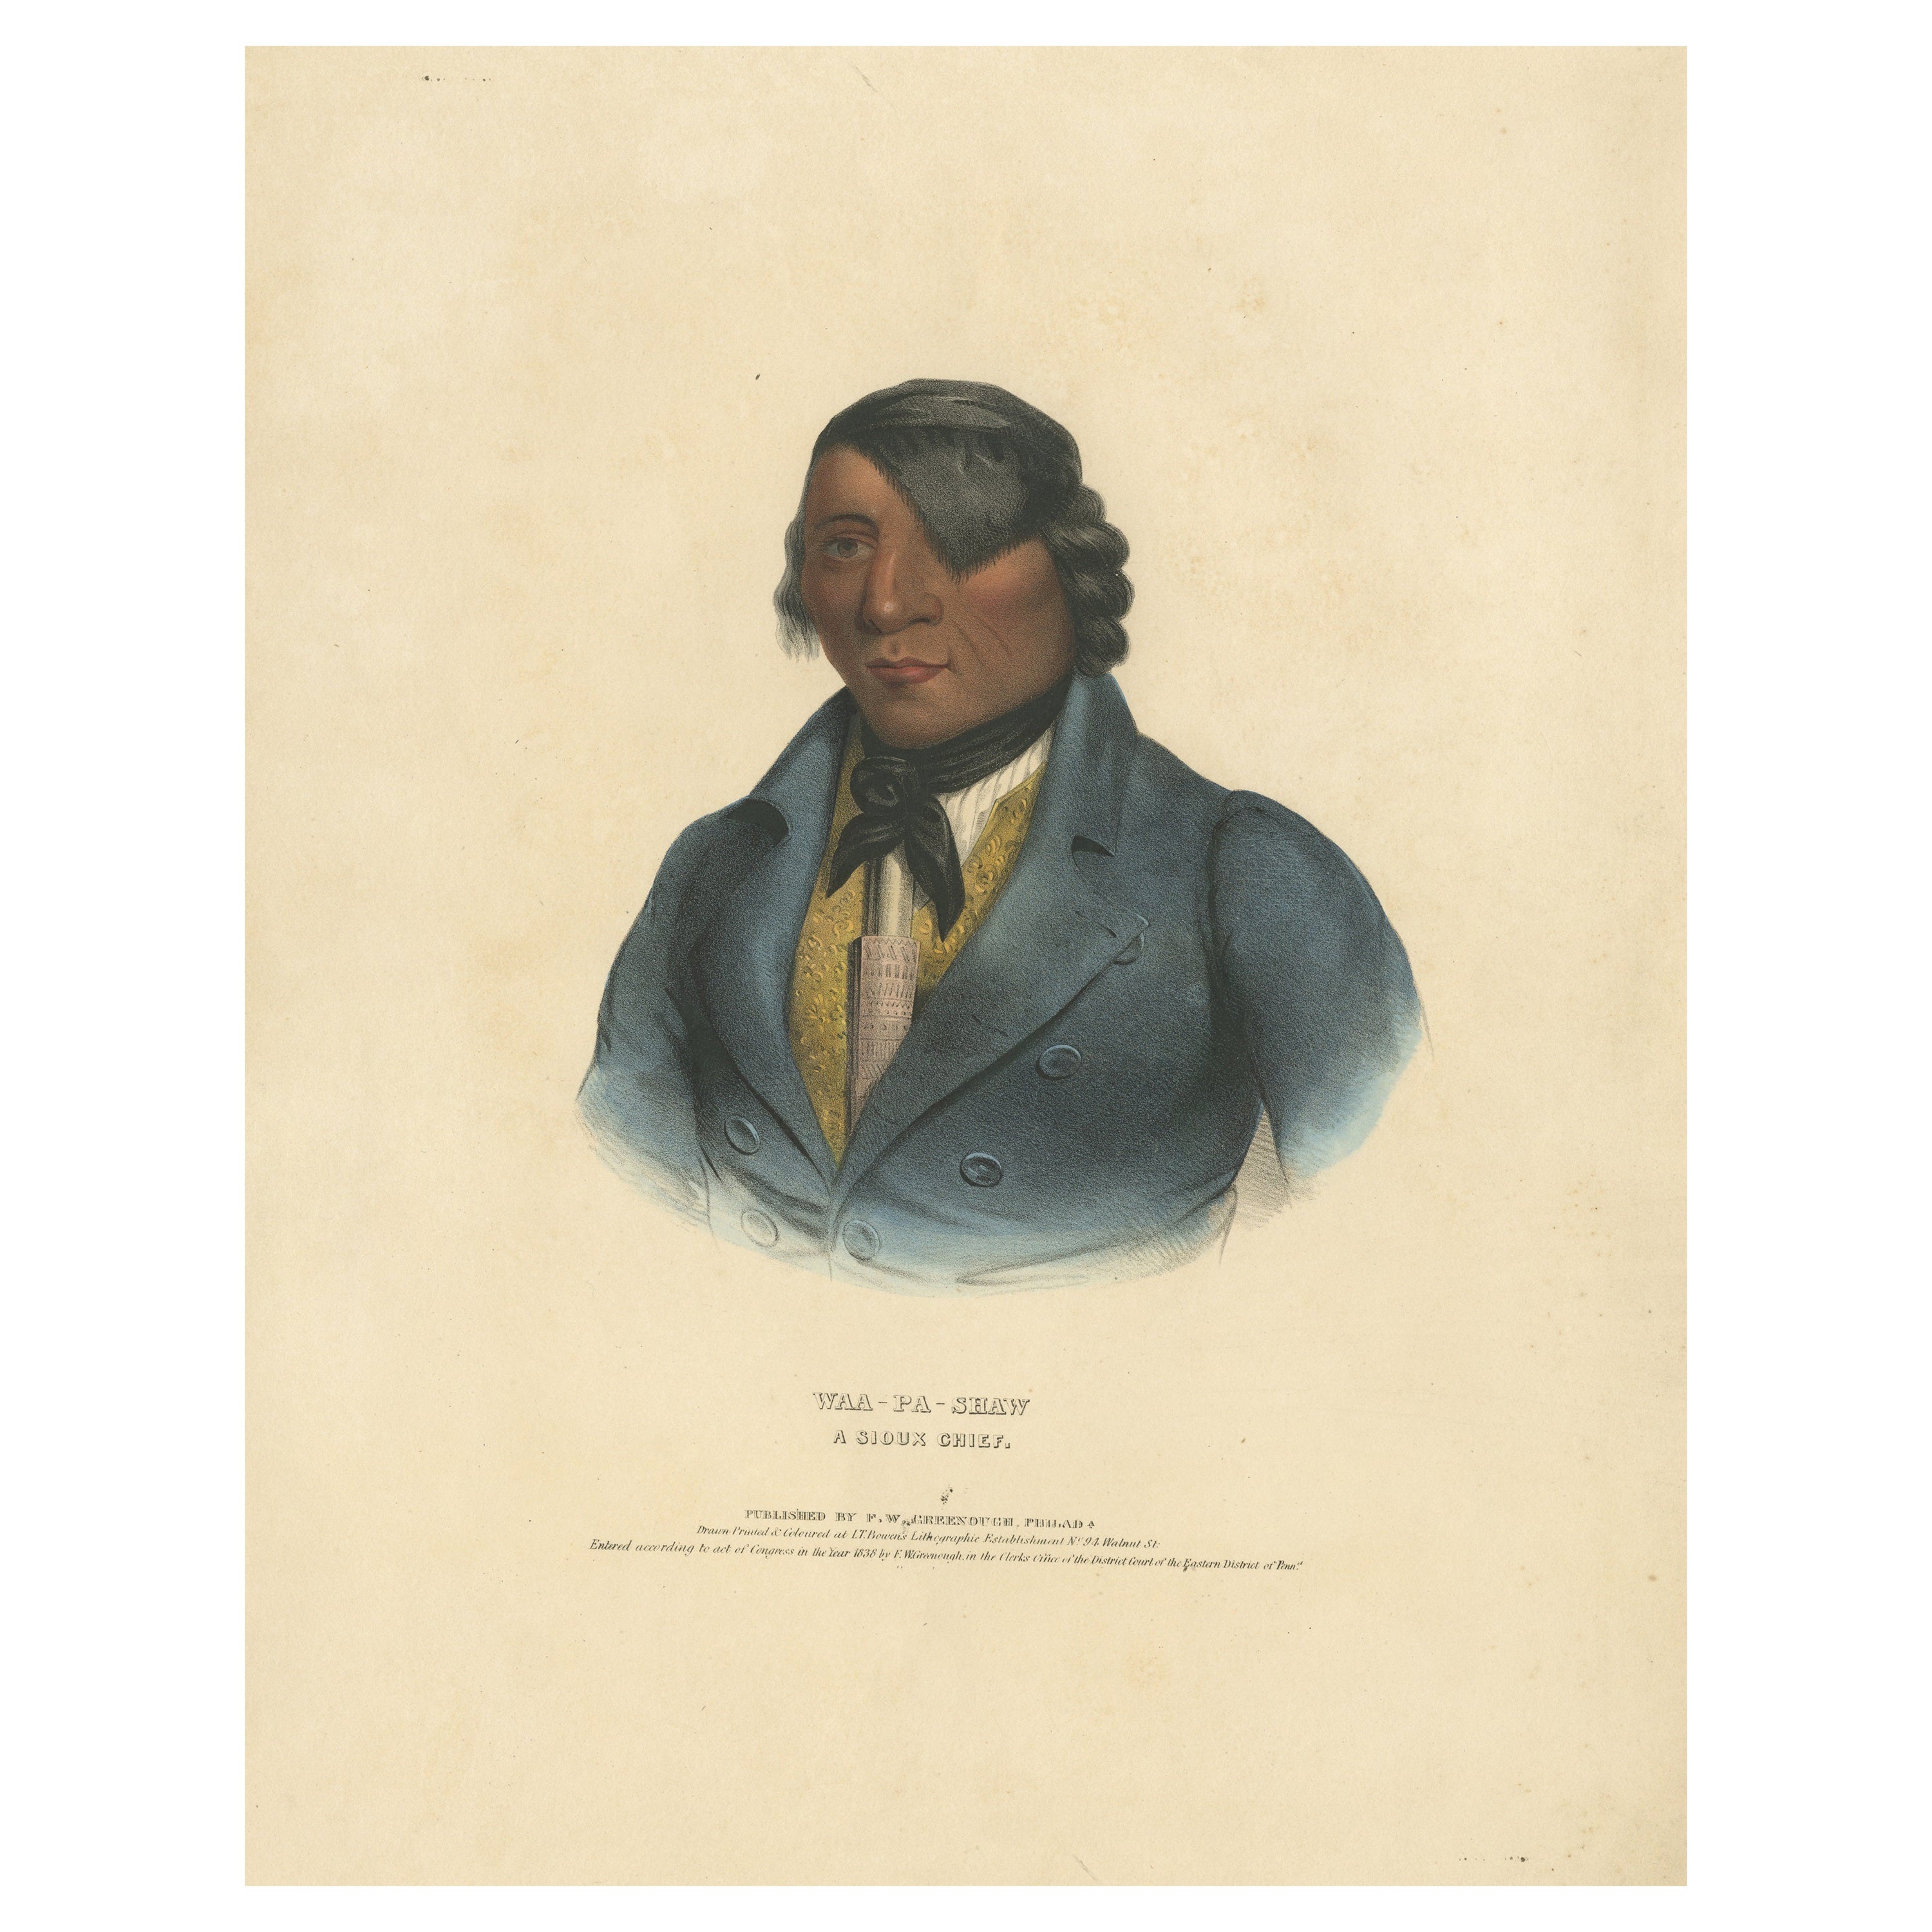 Grande gravure ancienne de Waa-Pa-Shaw, un chef Sioux, vers 1838